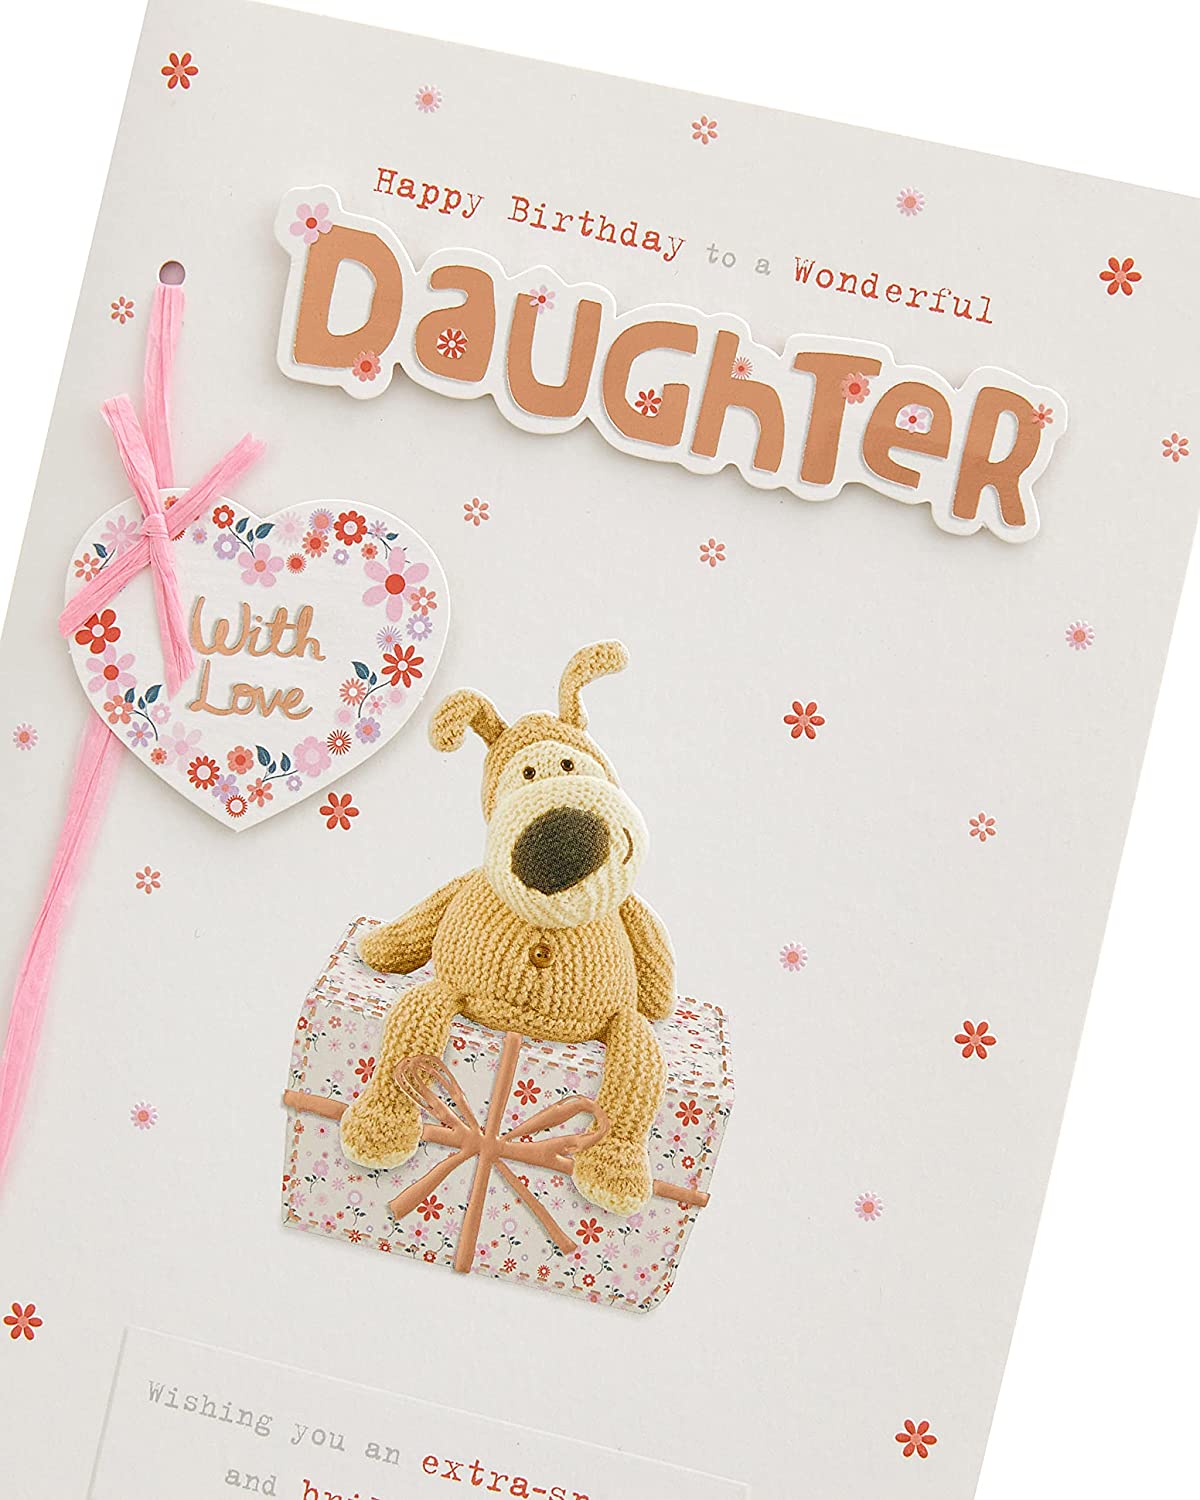 Cute Boofle Sending Big Present Daughter Birthday Card